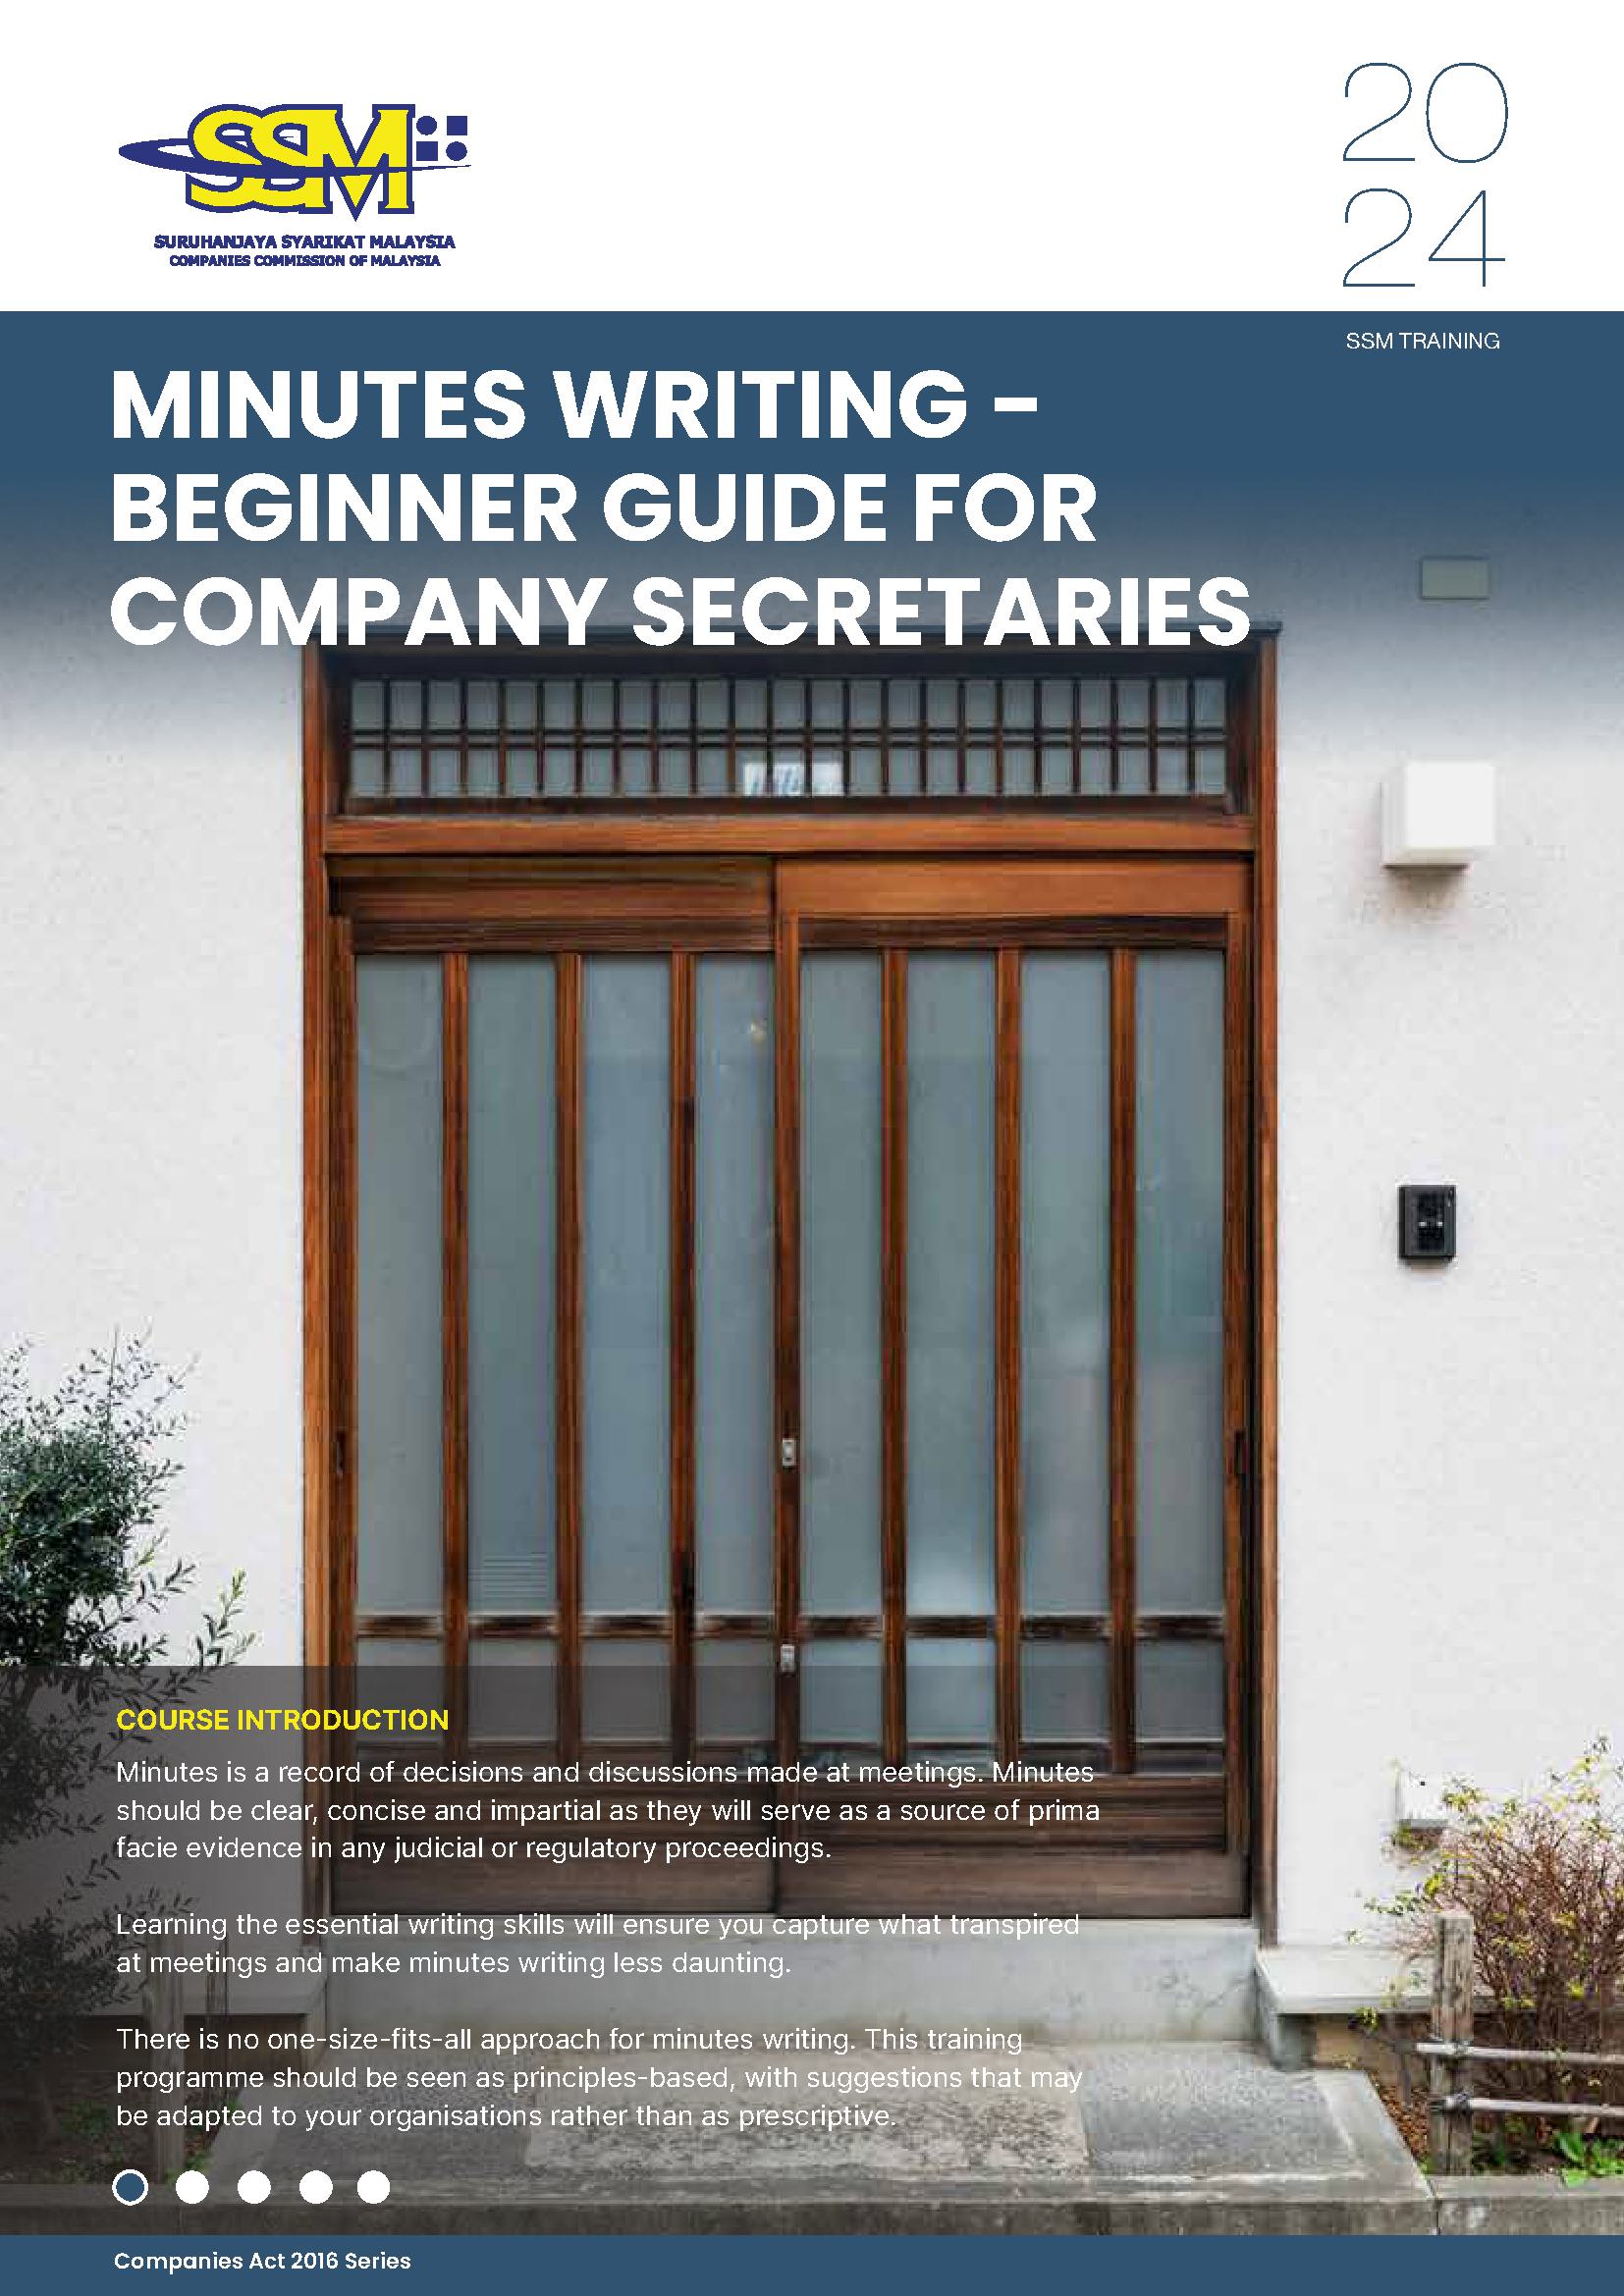 MINUTES WRITING - BEGINNER GUIDE FOR COMPANY SECRETARIES.jpg